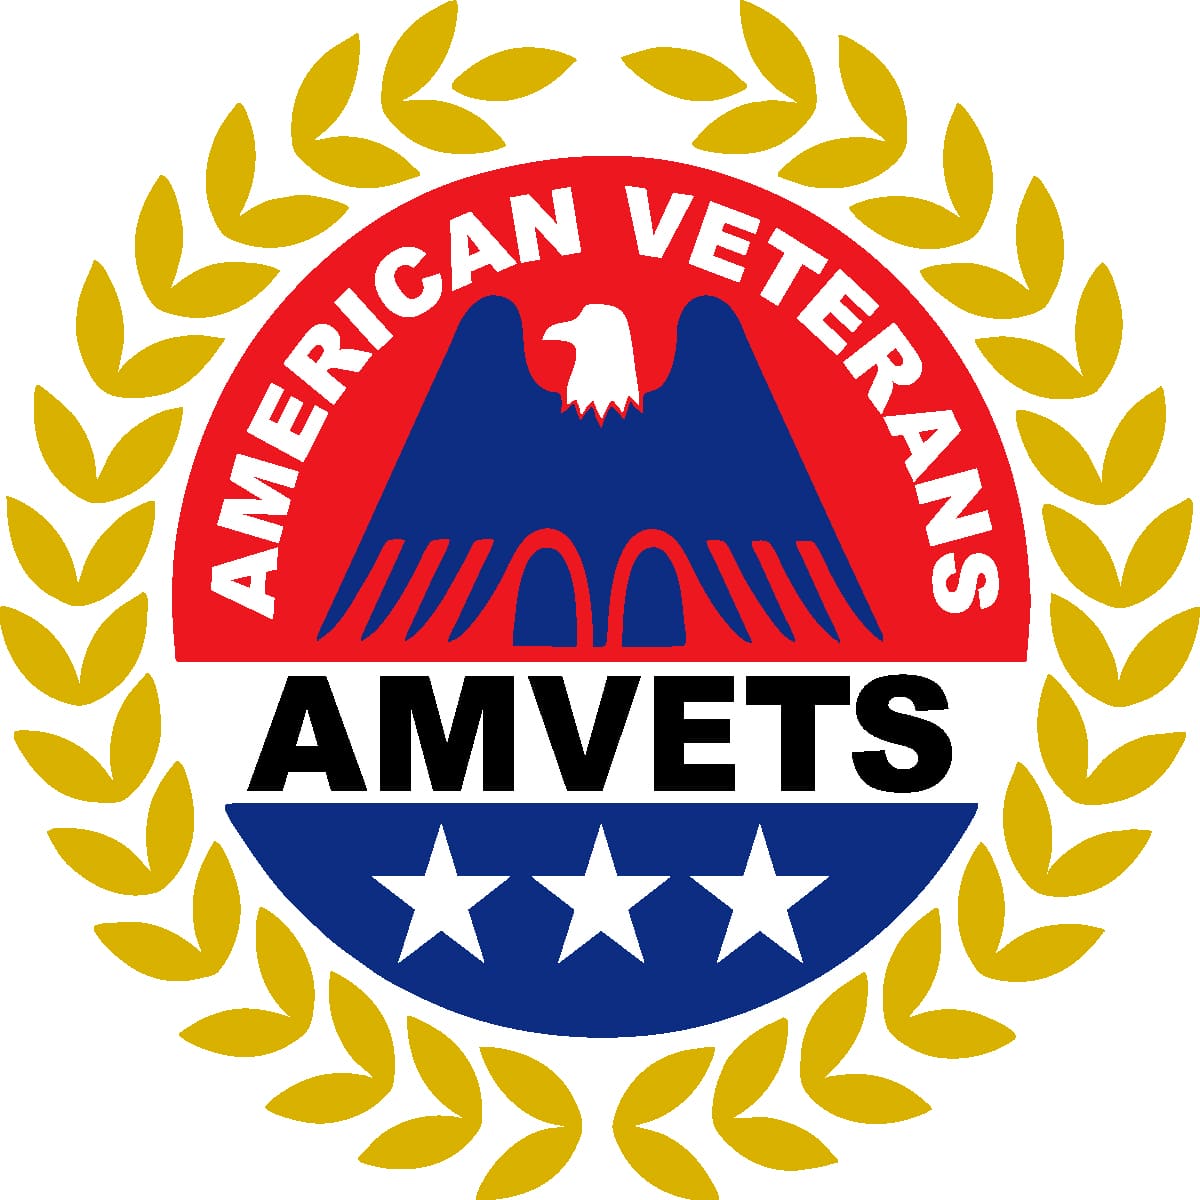 Amvets logo